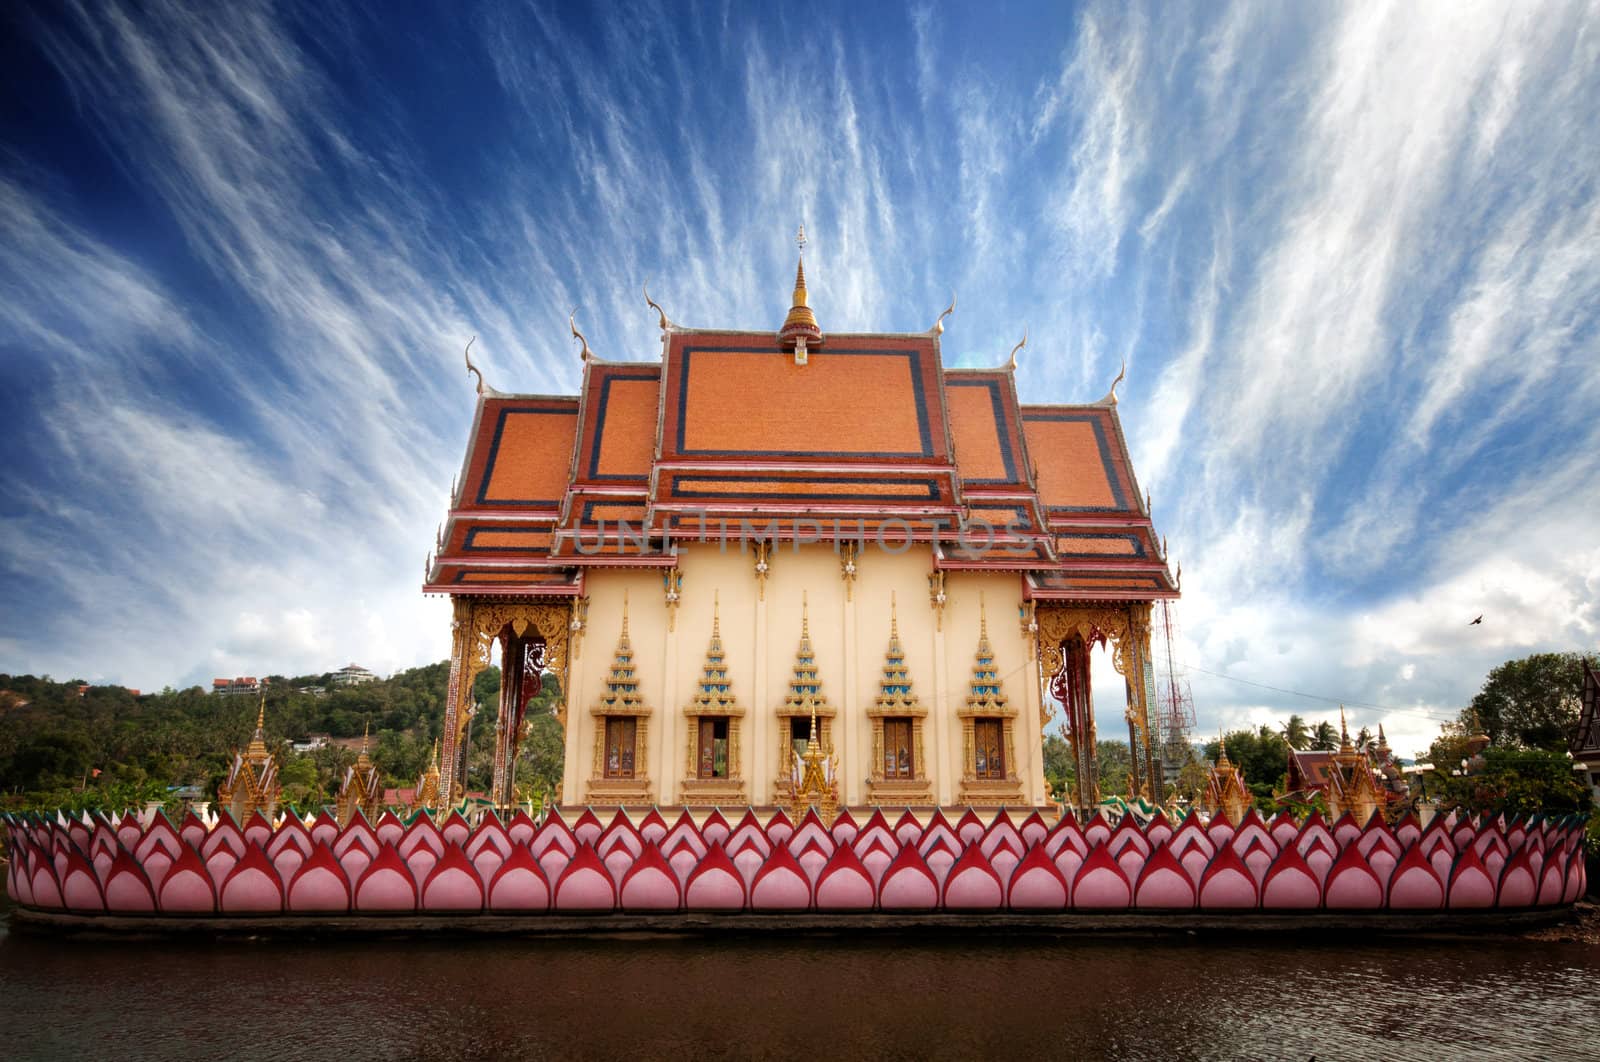 Buddhist temple at Ko Samui island, Thailand